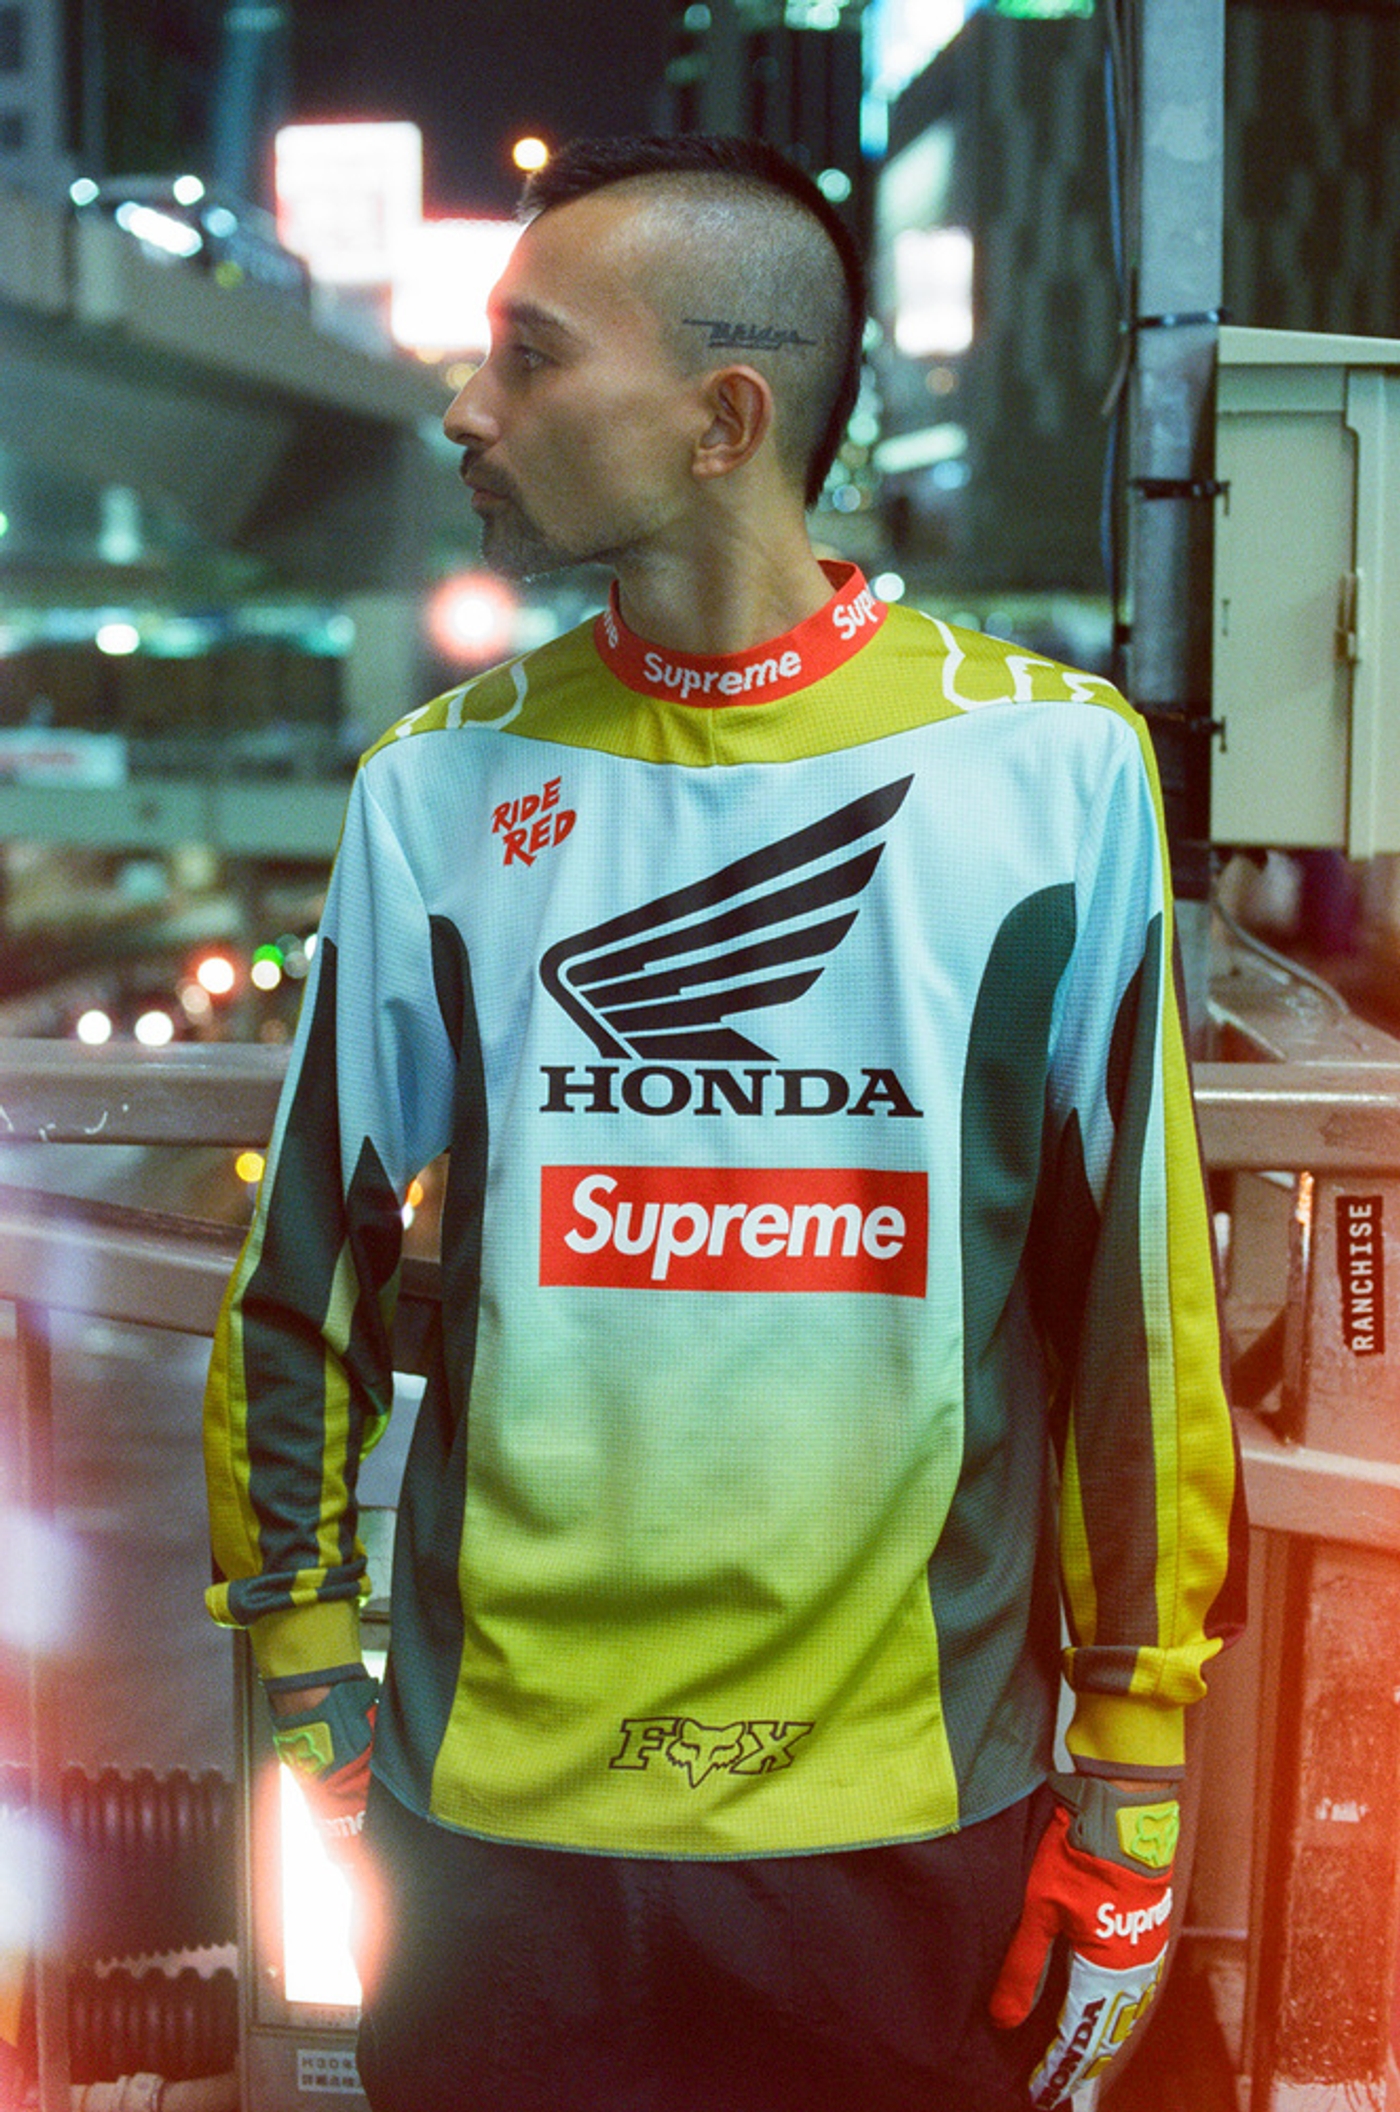 Supreme®/Honda®/Fox® Racing (2) (2/34)